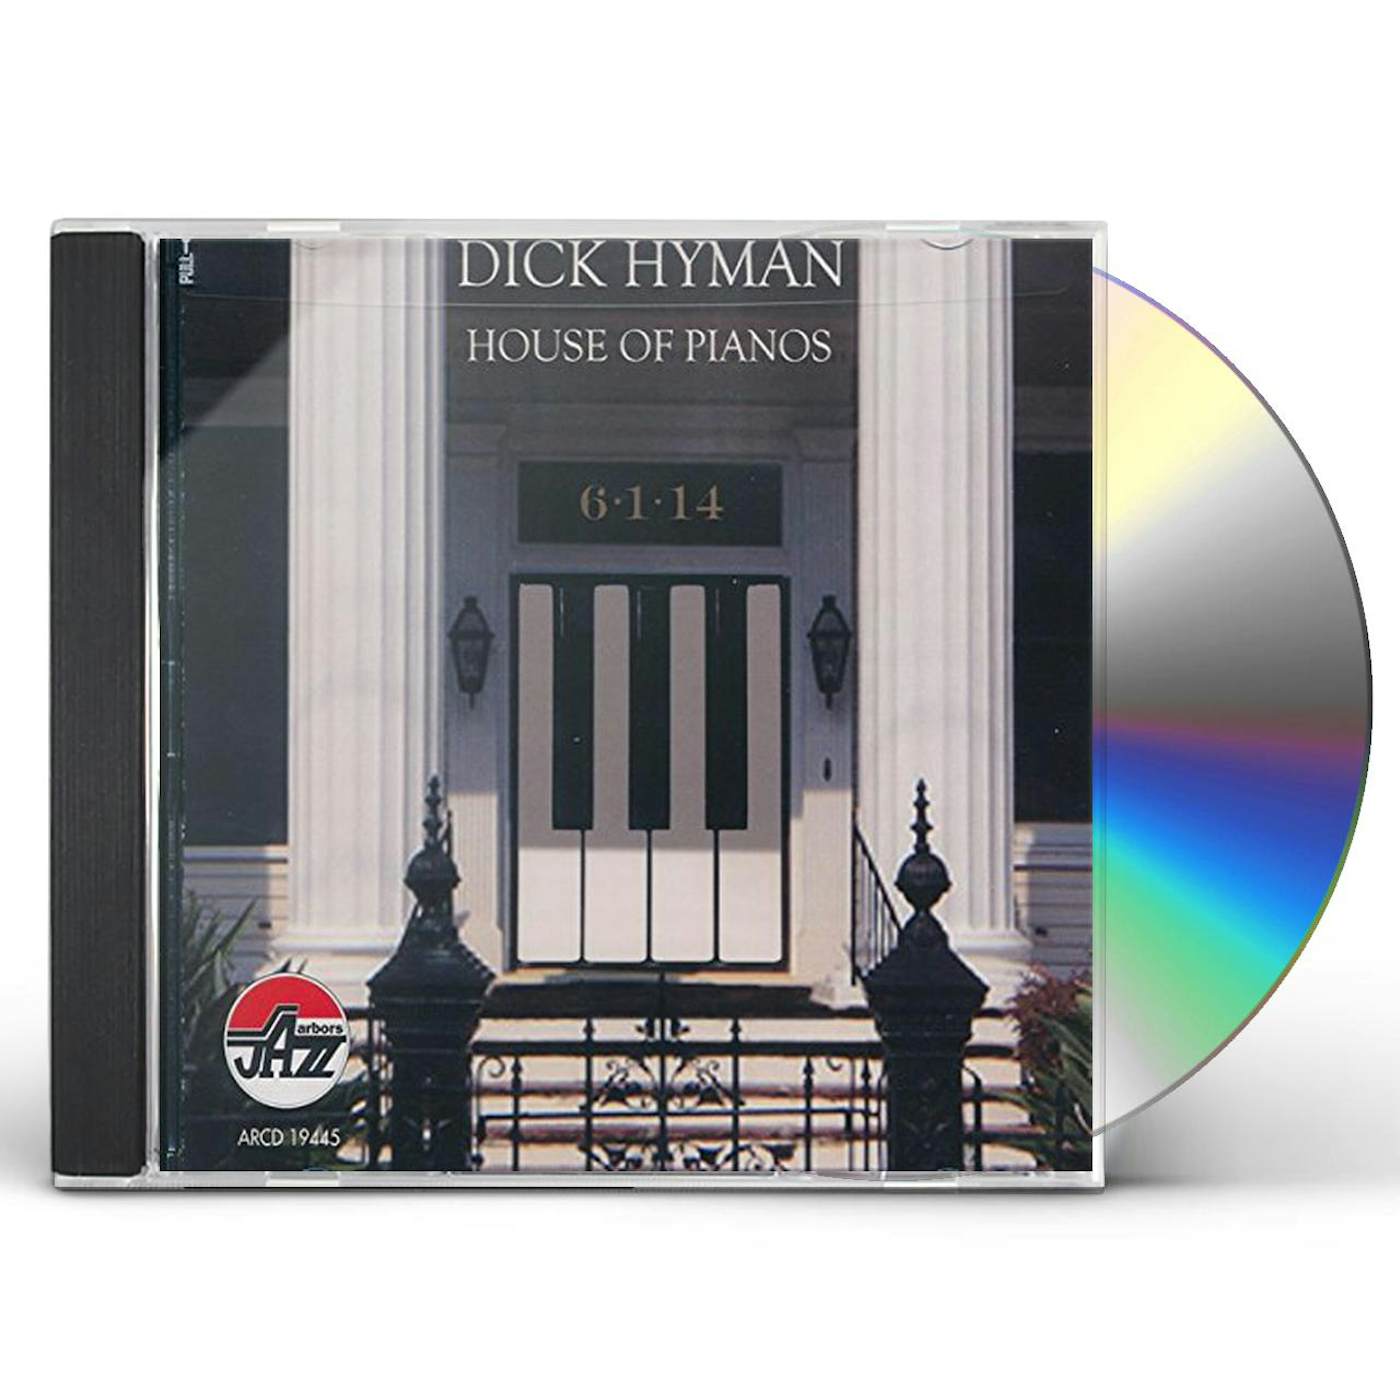 Dick Hyman HOUSE OF PIANOS CD